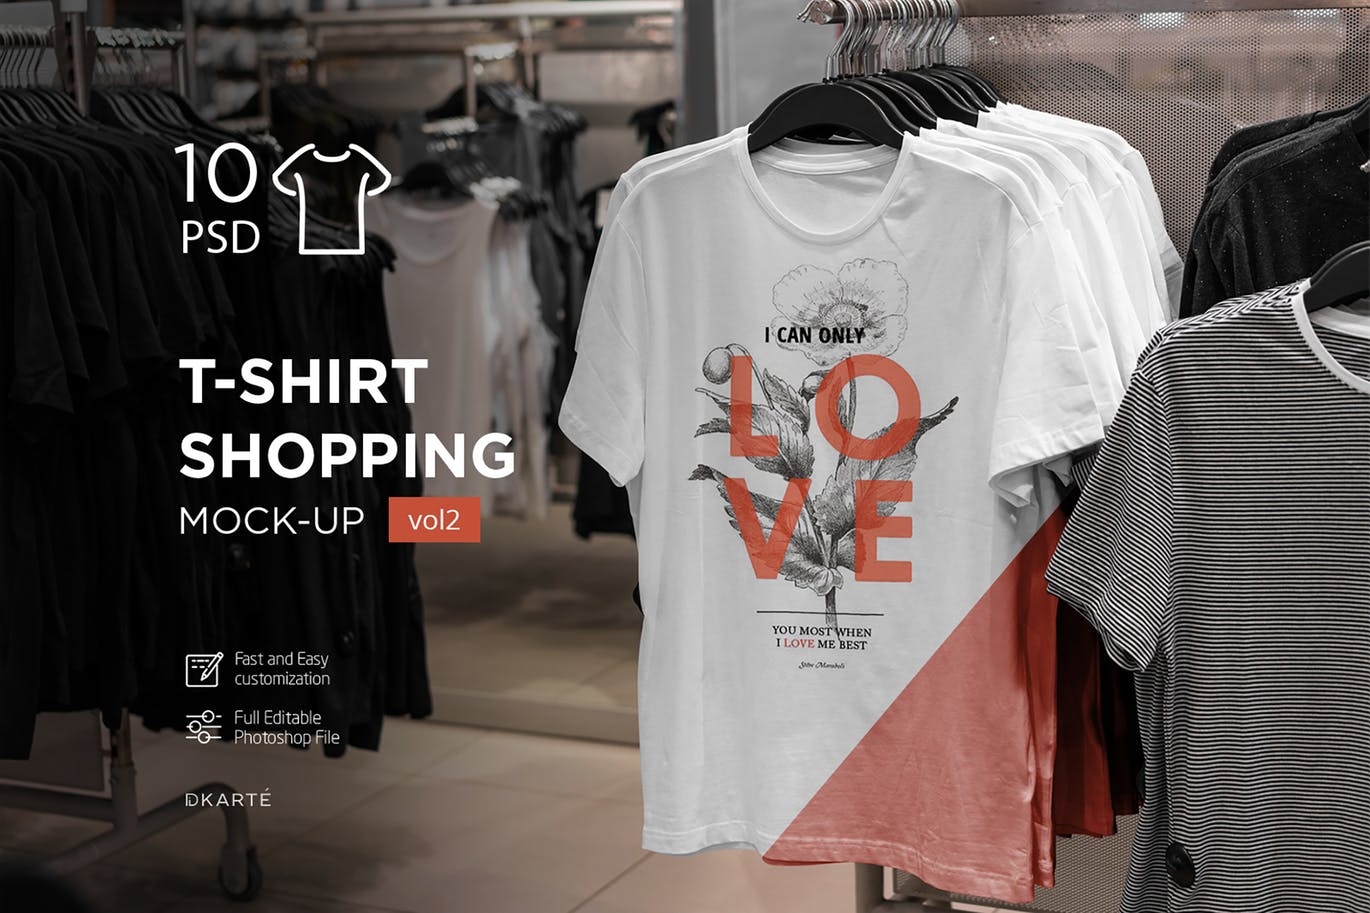 男士T恤货架陈列预览样机模板 T-Shirt Shopping Mock-Up Vol.2插图